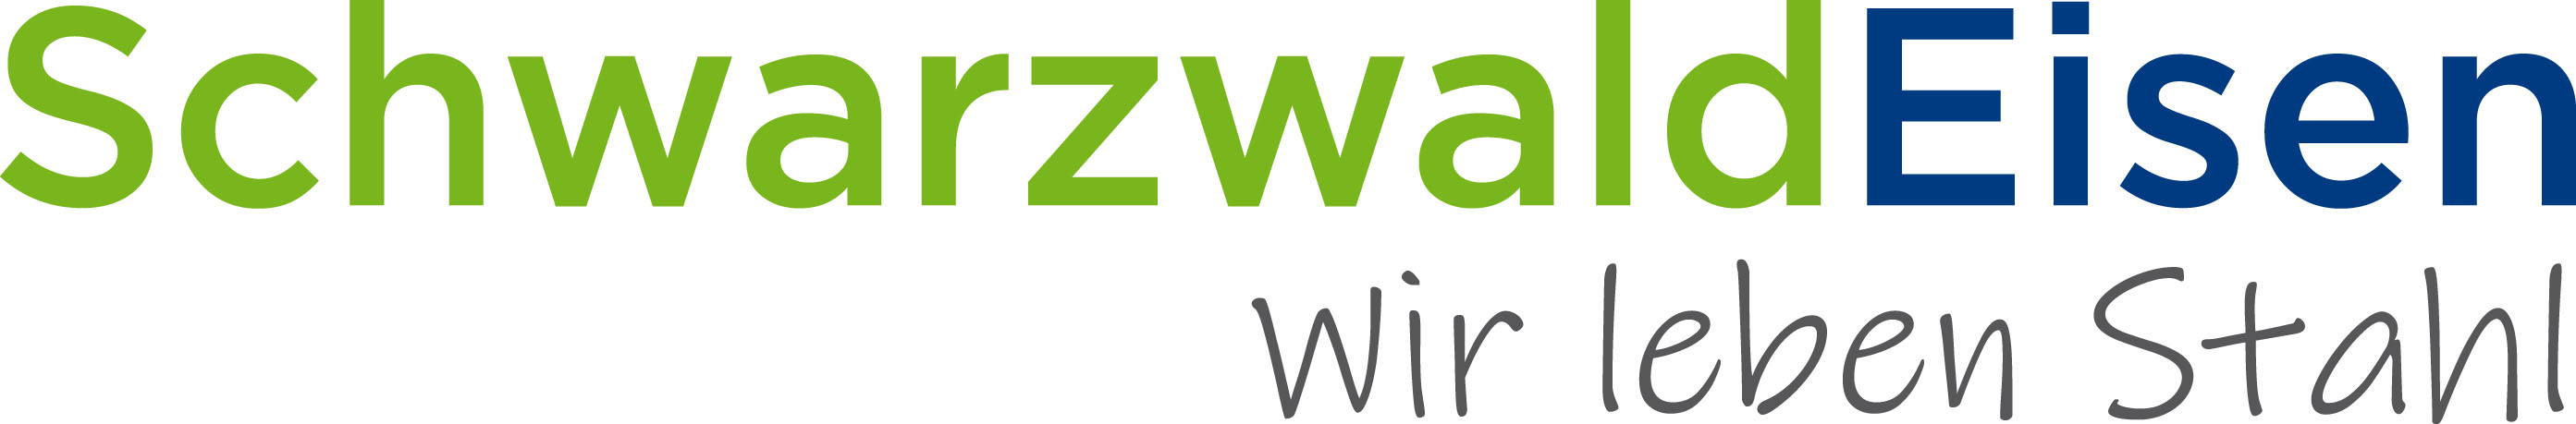 SchwarzwaldEisenhandel GmbH & Co. KG